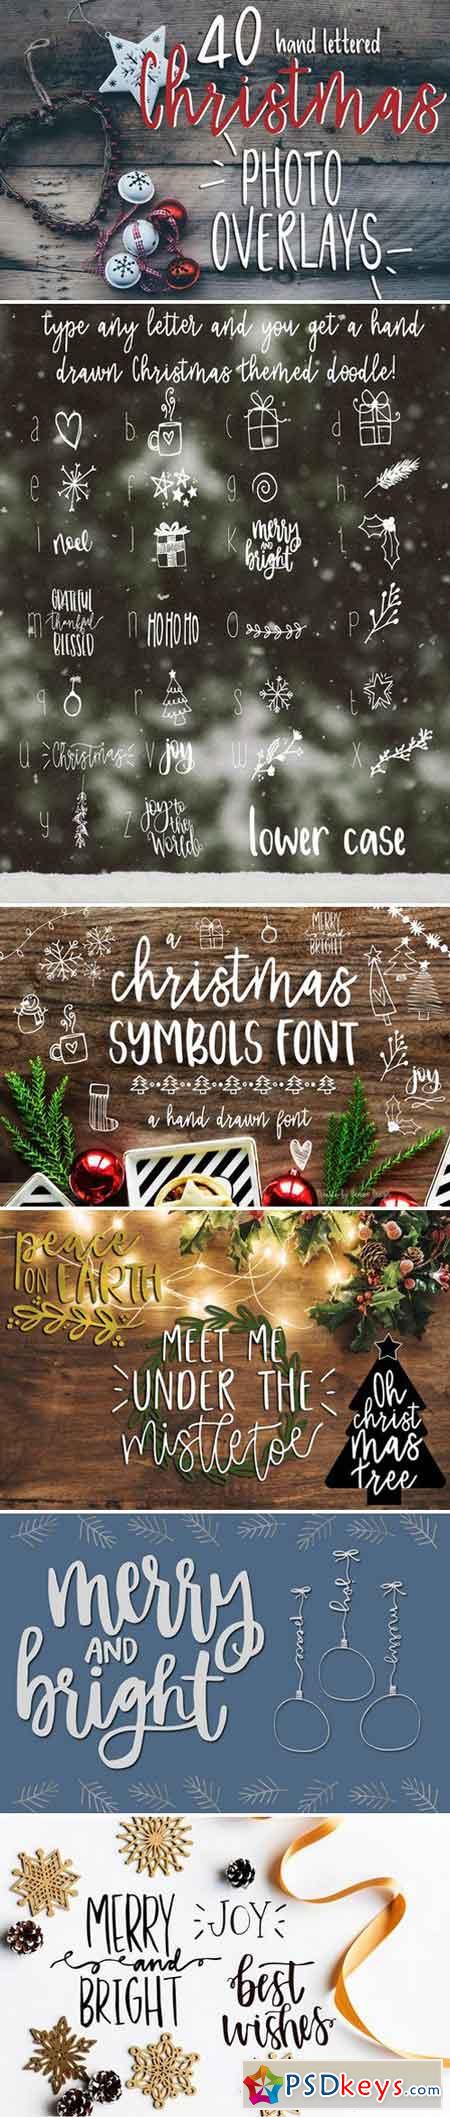 Christmas Photo Overlays + Free Font 2066108